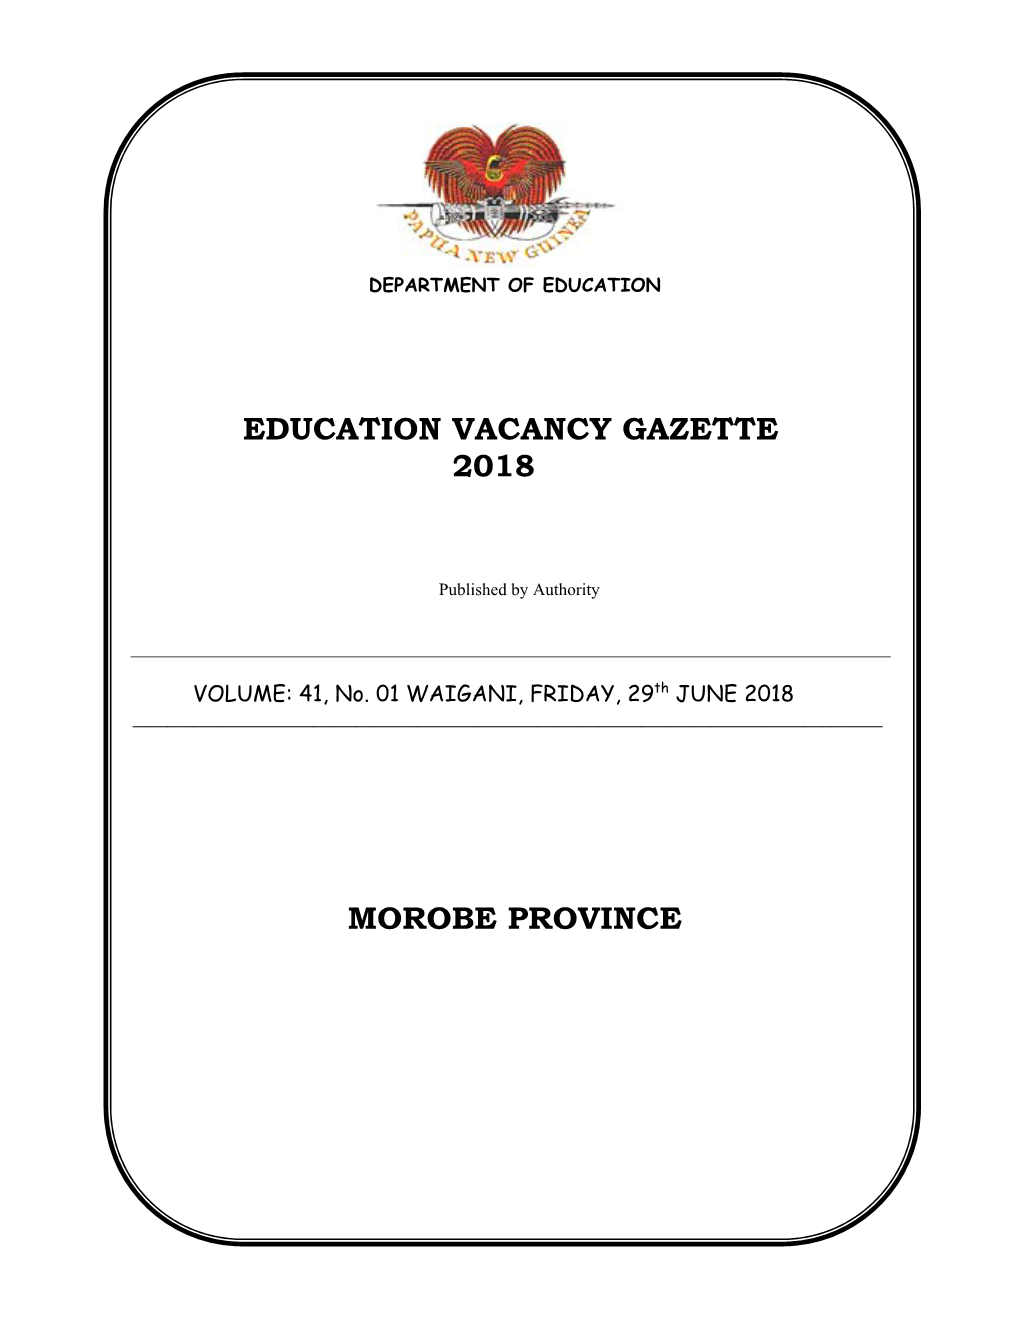 Morobe Province Education Vacancy Gazette 2018